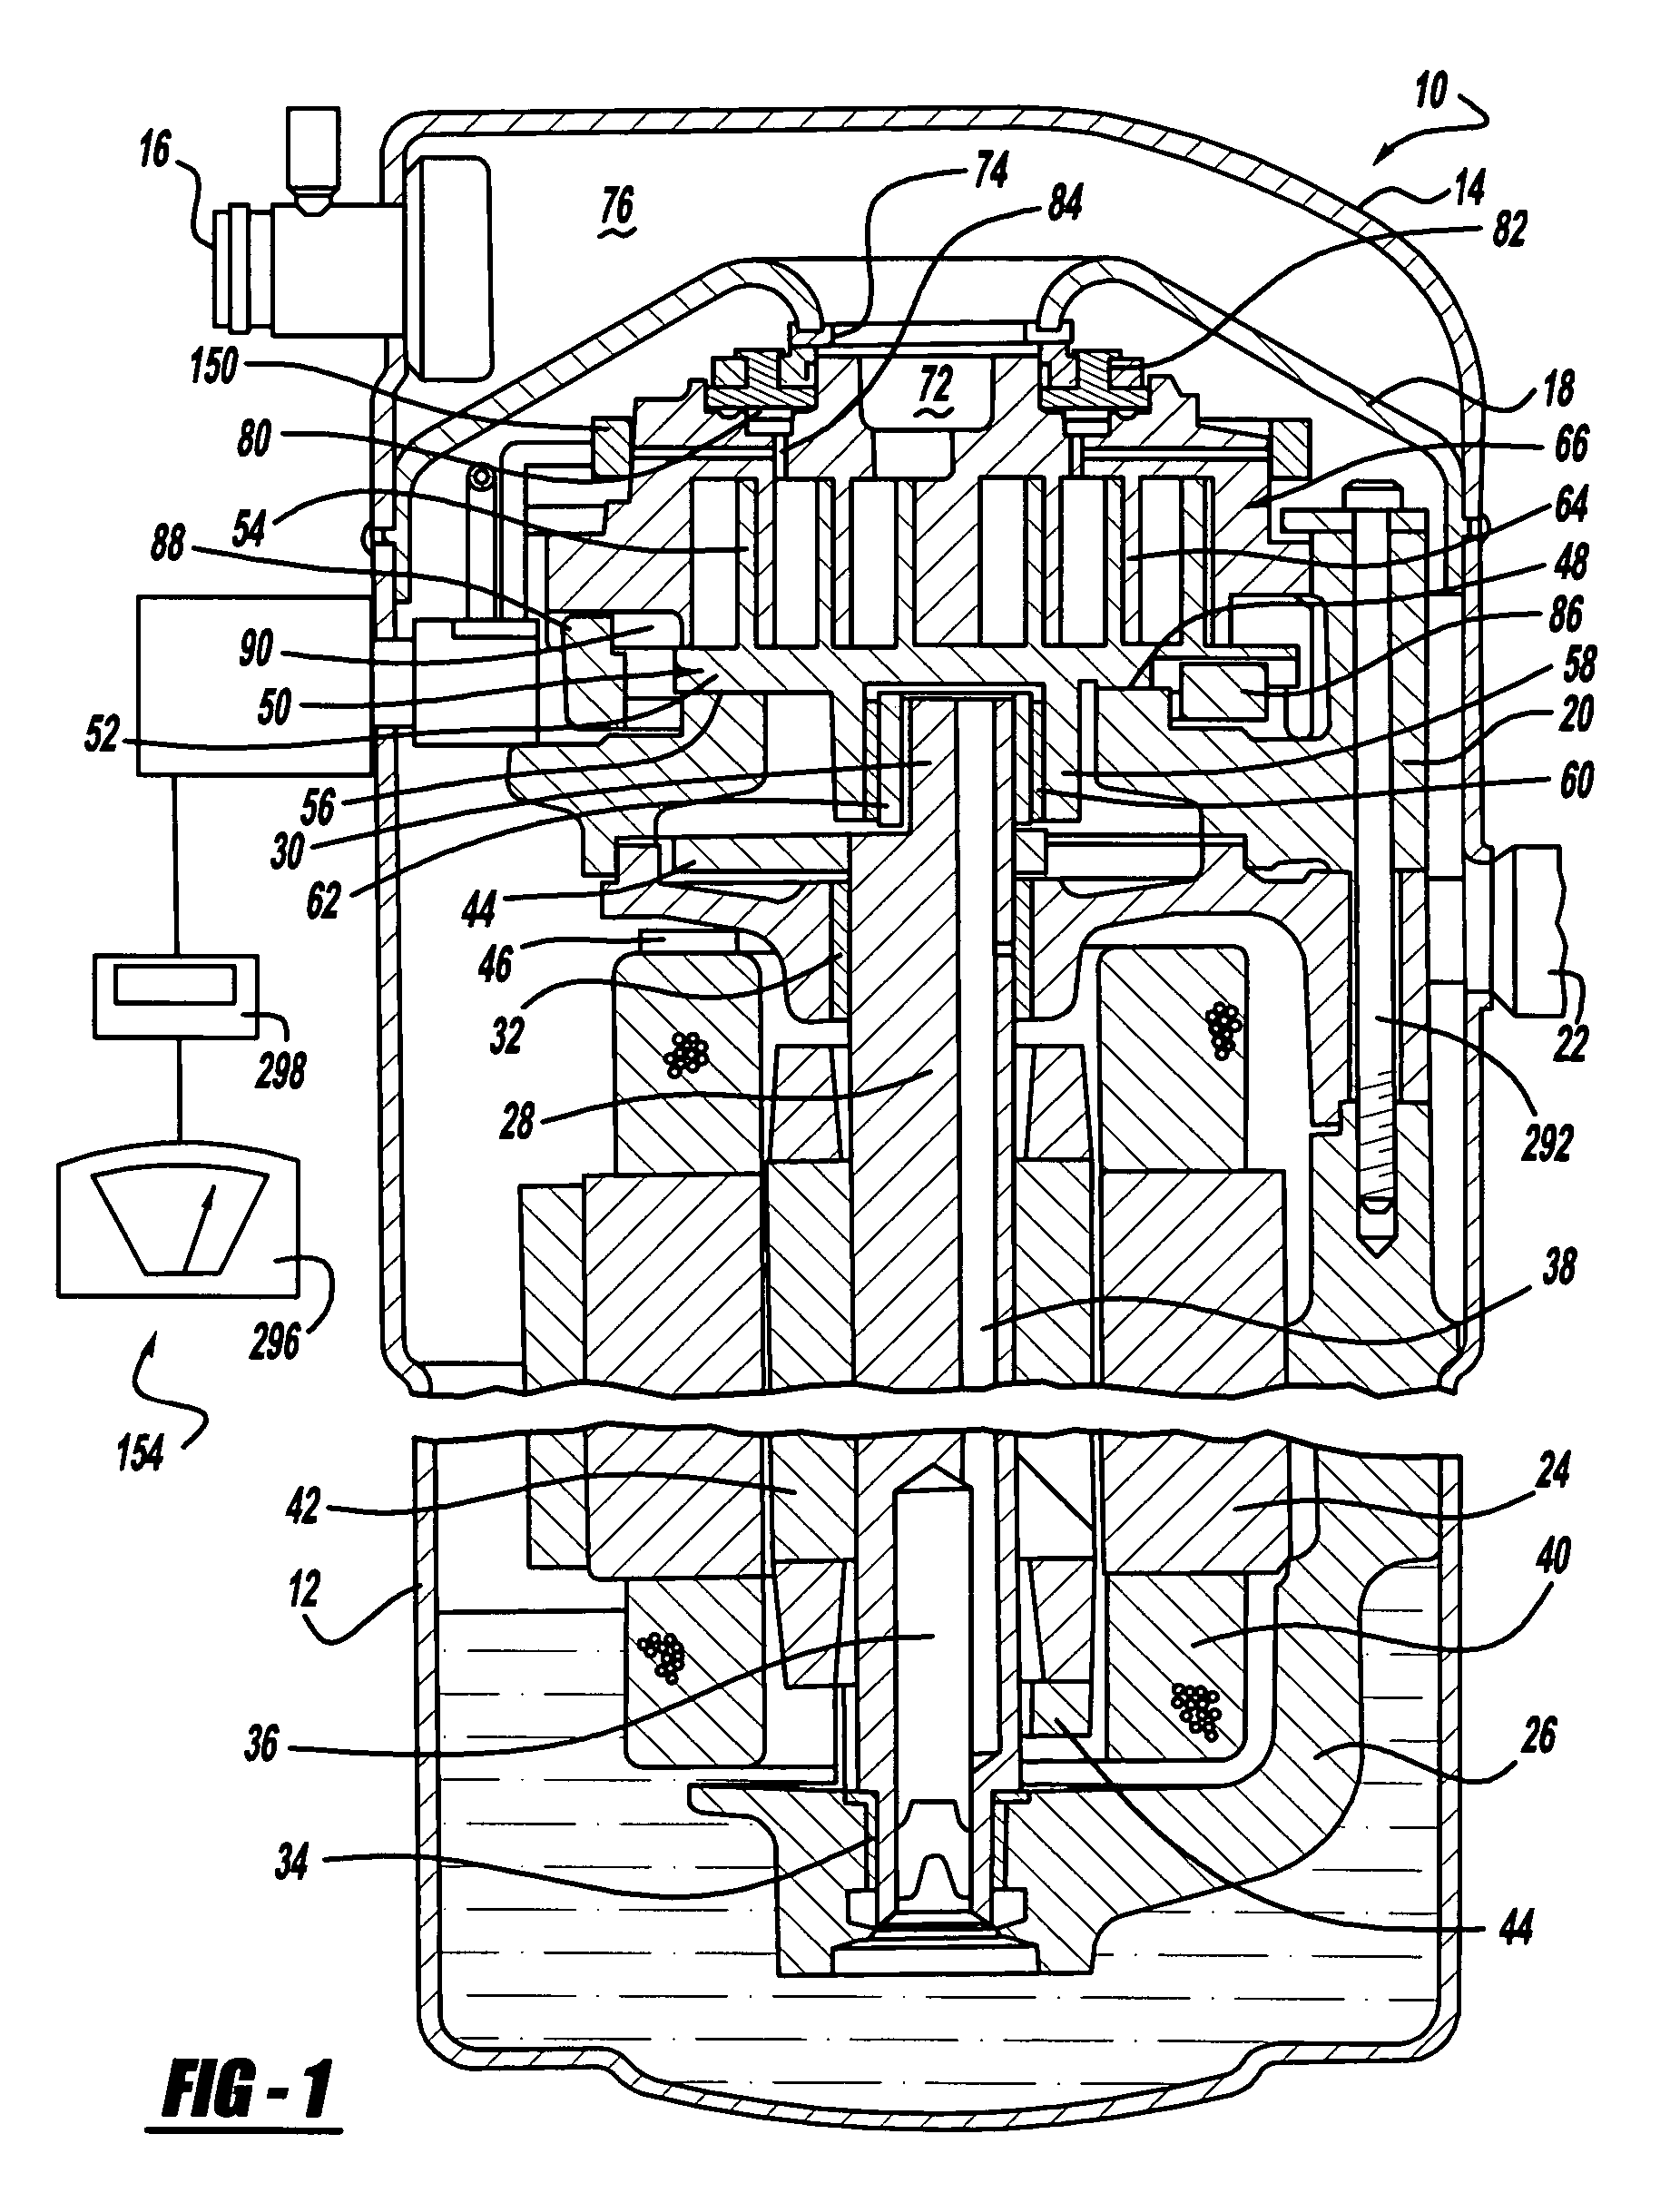 Capacity modulated scroll compressor